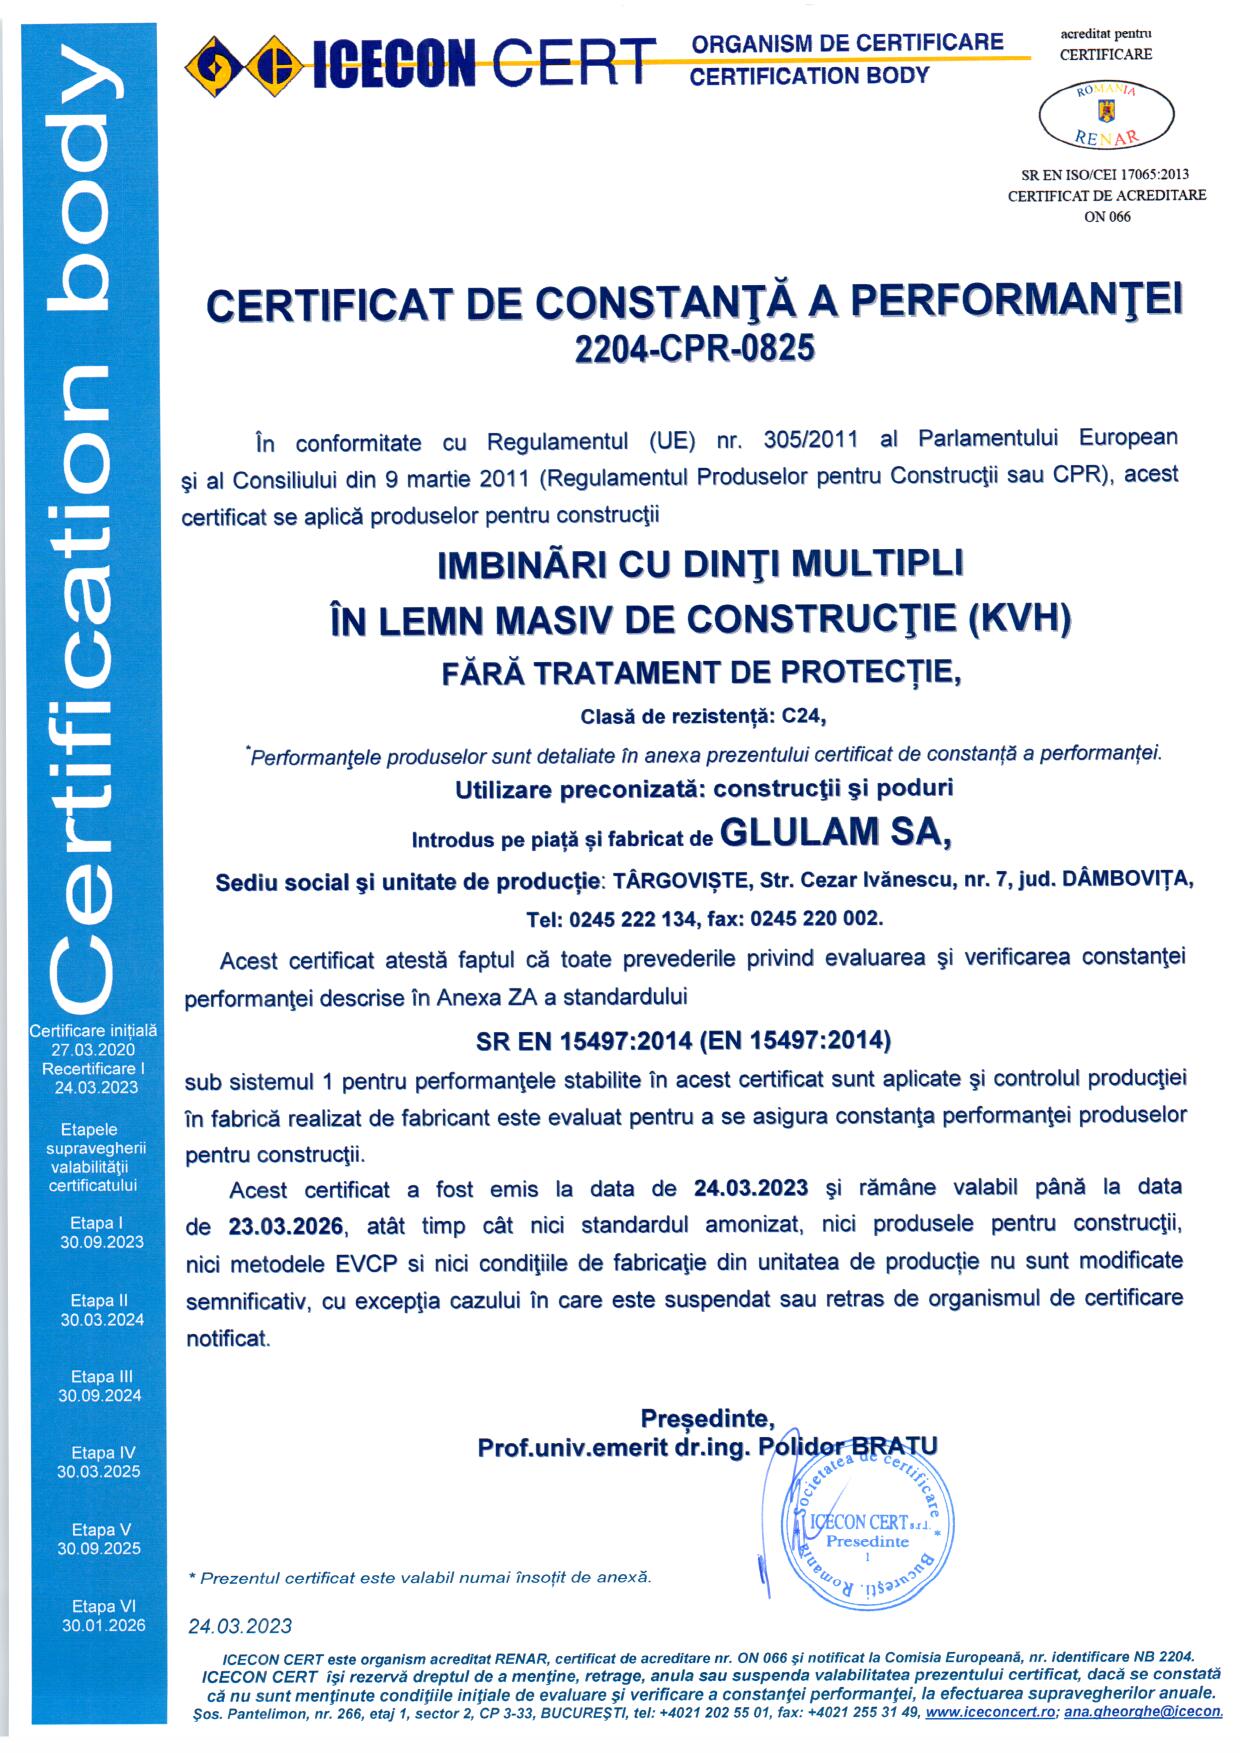 GLULAM Certificat constanta performanta 2023 - Lemn masiv constructii KVH C24 1